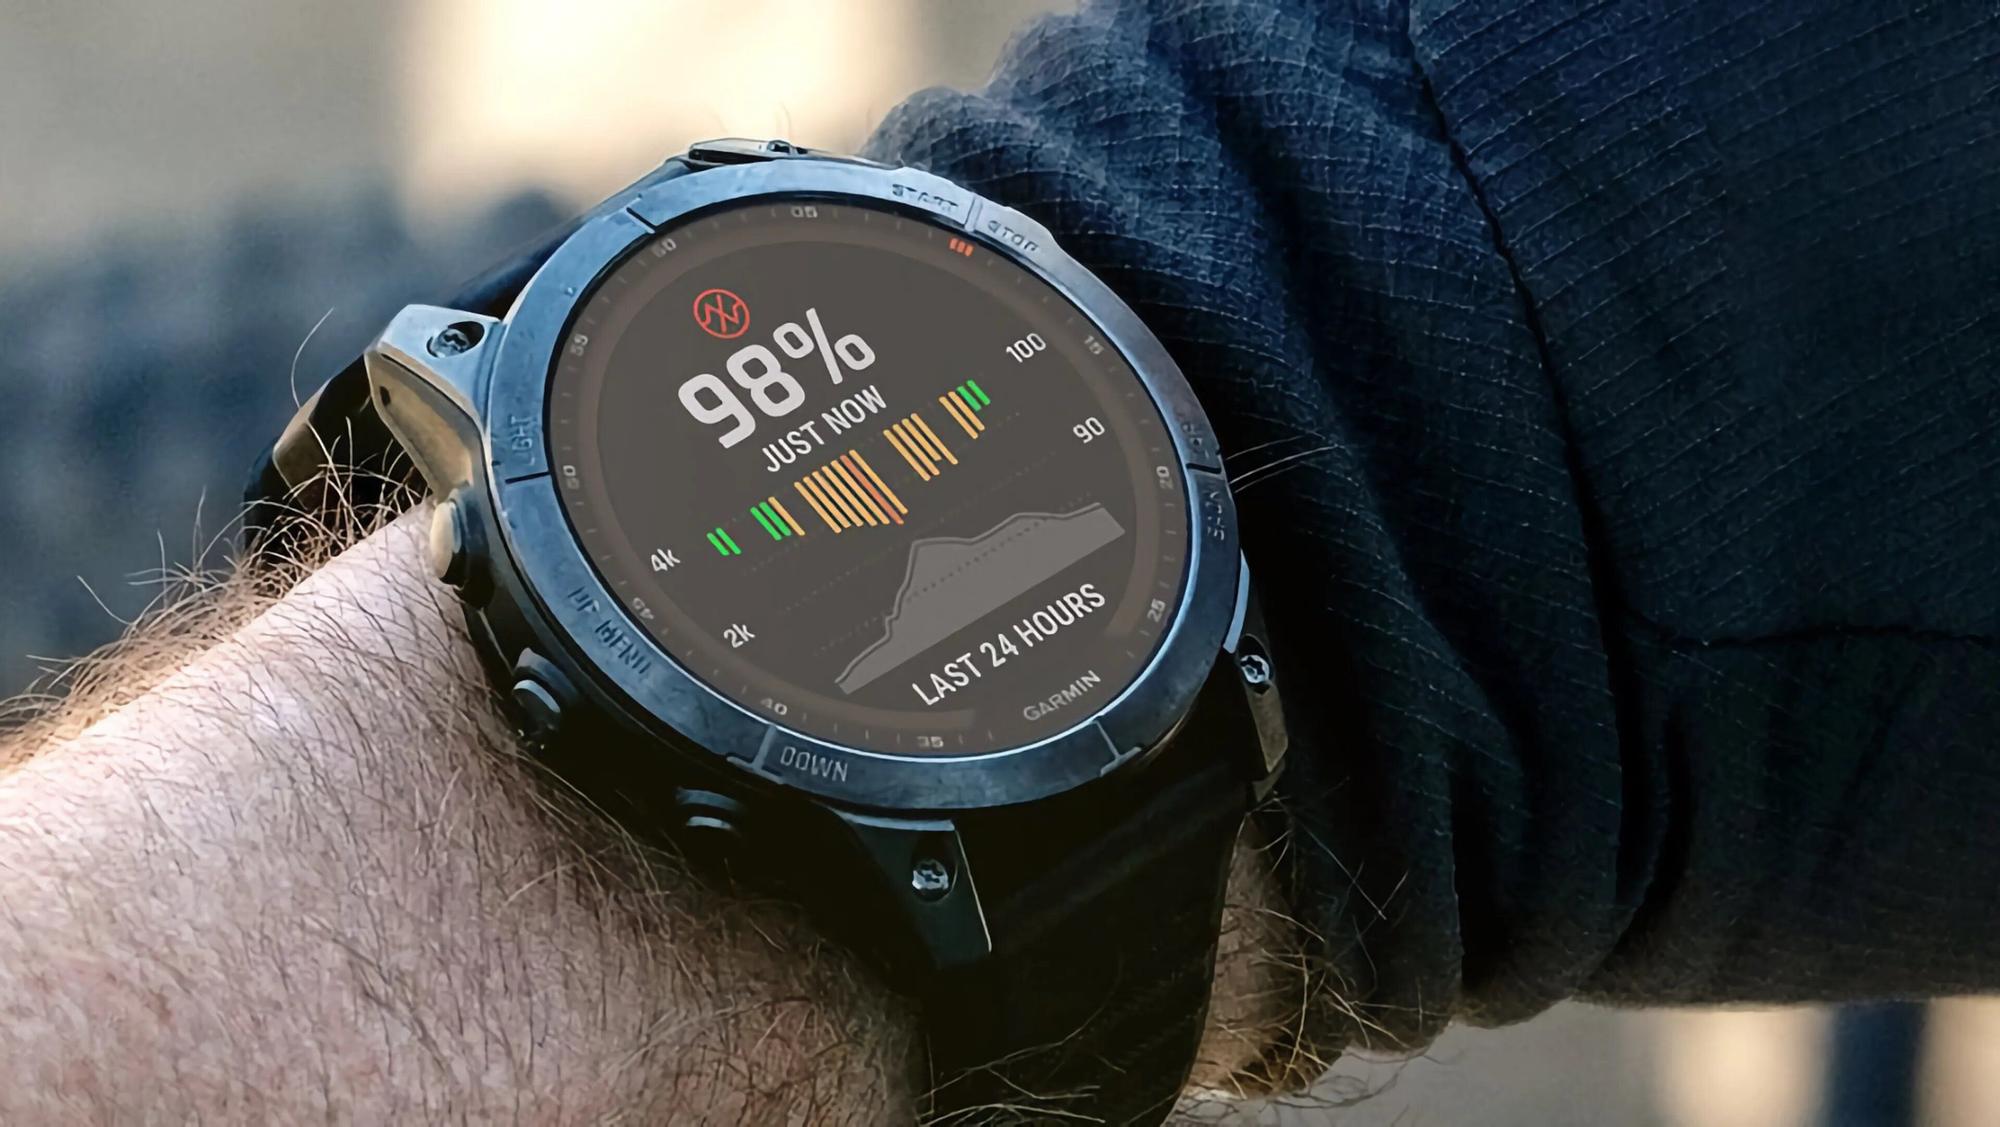 Garmin Forerunner 945 reloj inteligente de alta calidad con GPS